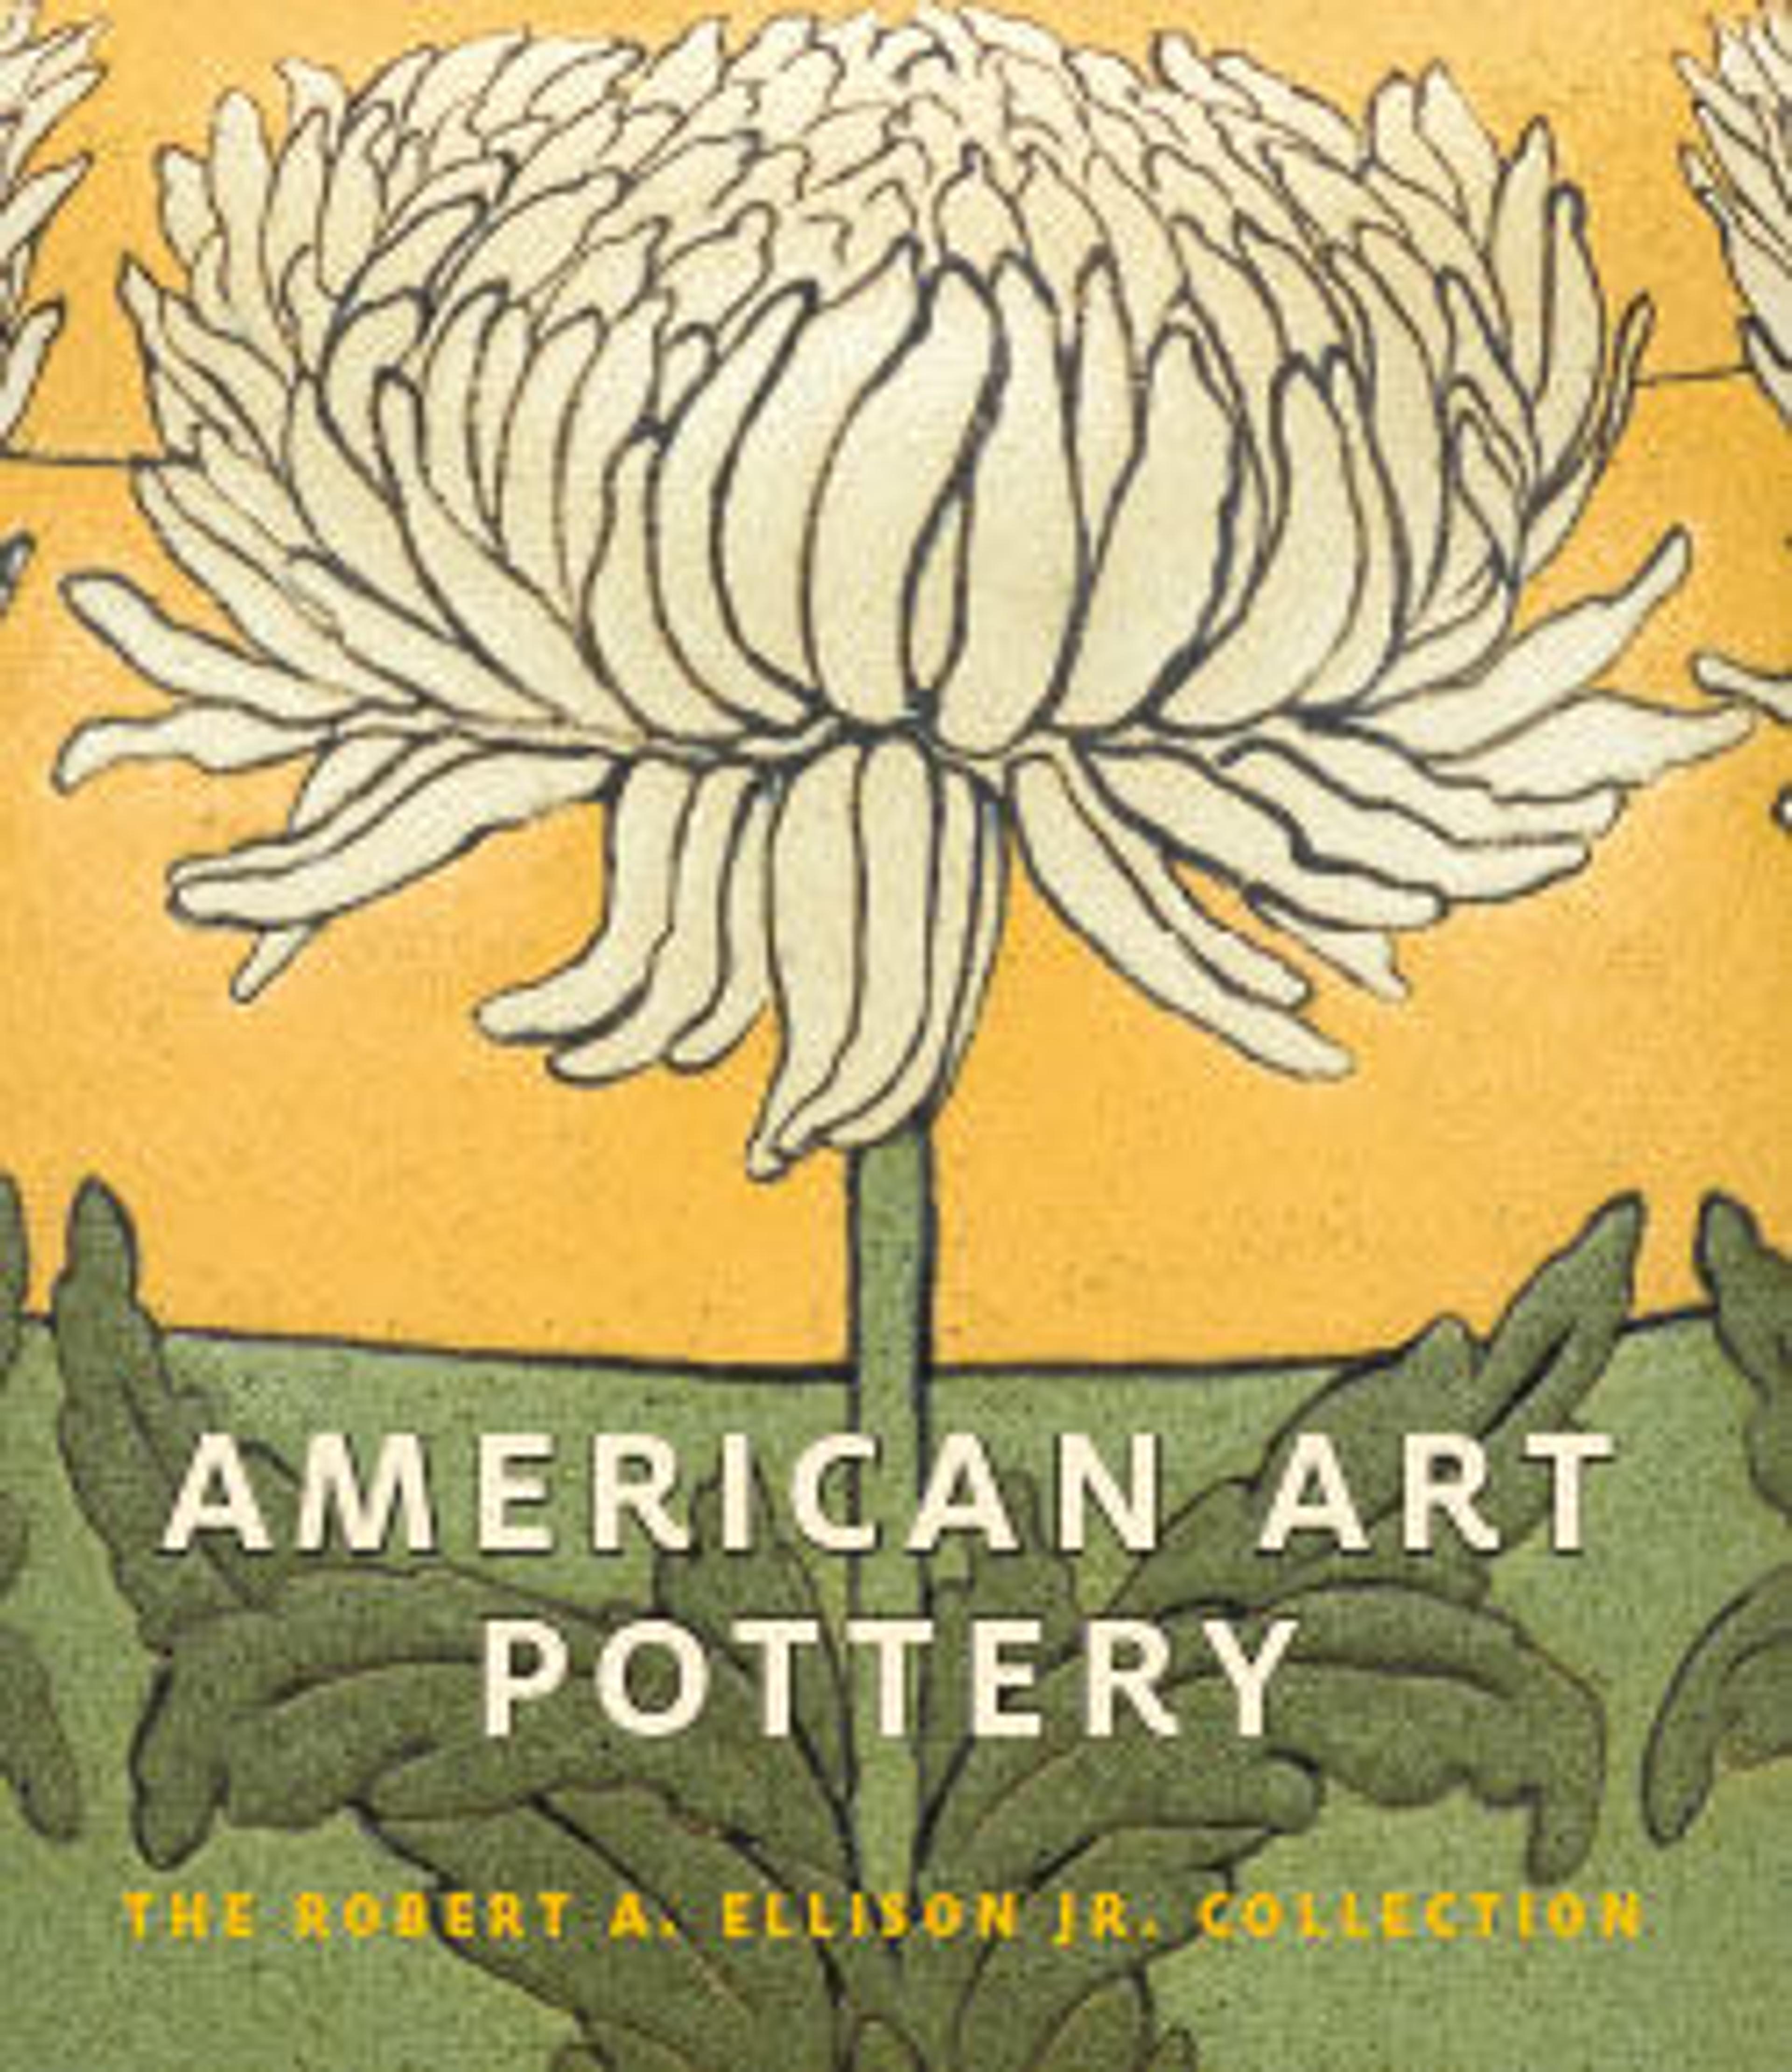 American Art Pottery: The Robert A. Ellison Jr. Collection